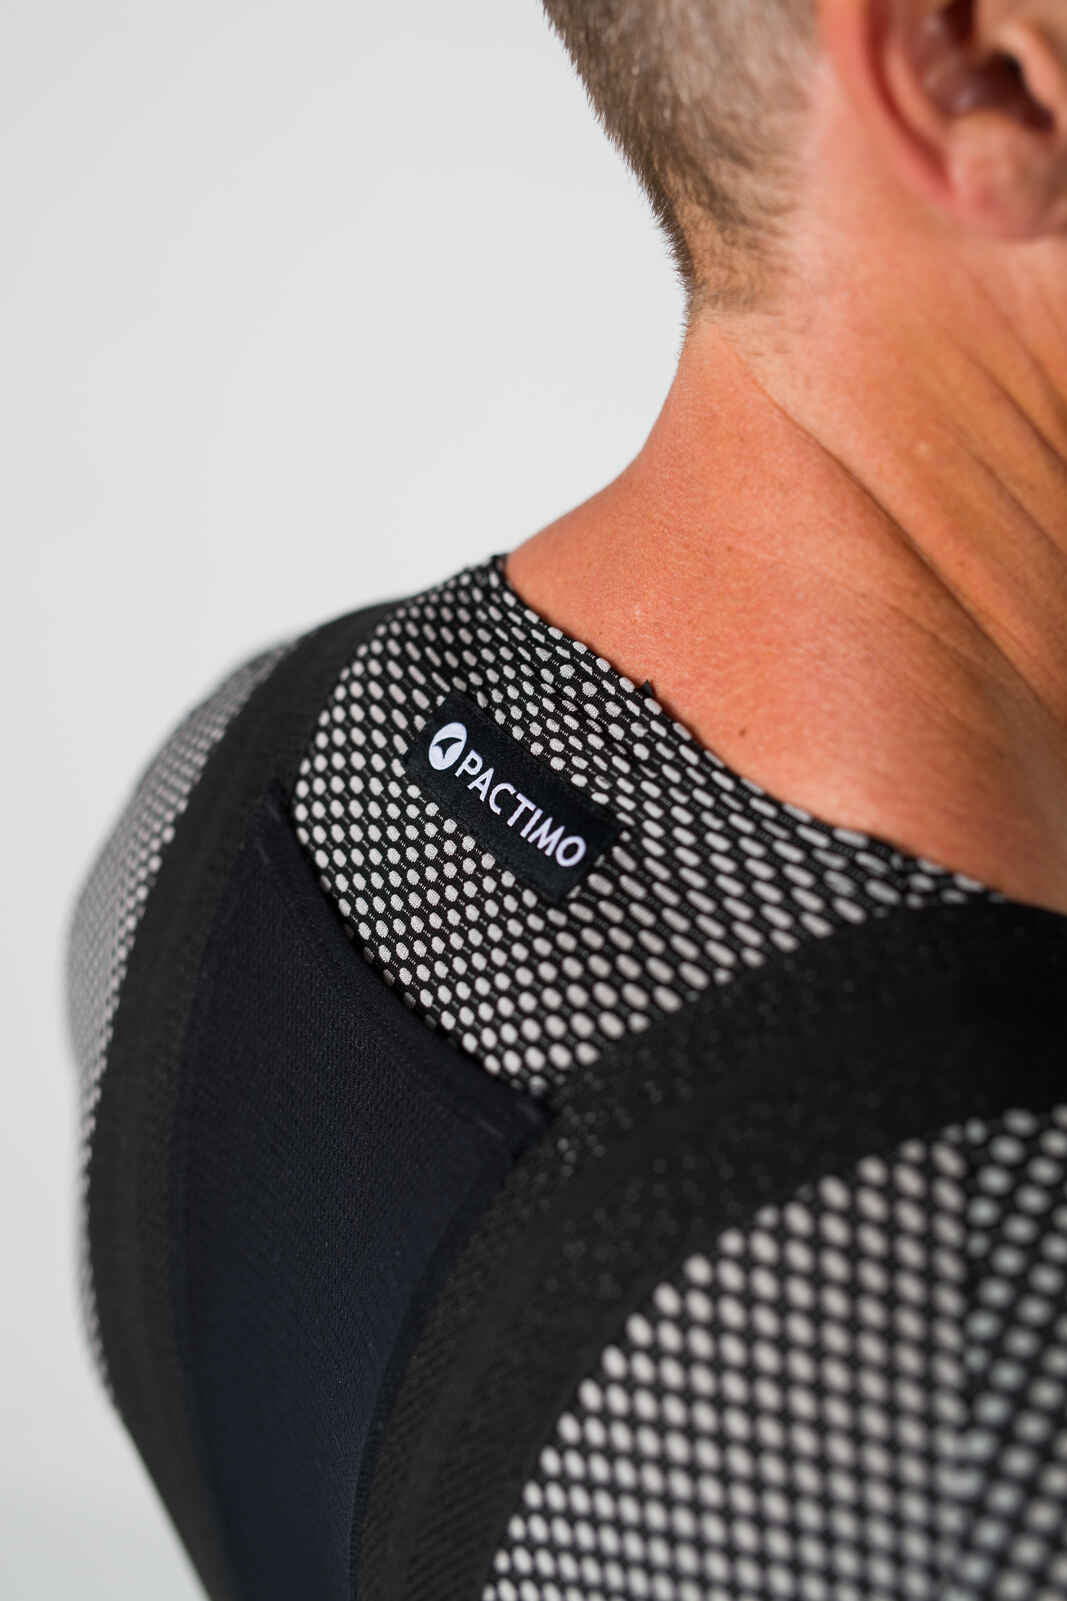 Men's Thermal Cycling Base Layer - Back Collar Close-Up